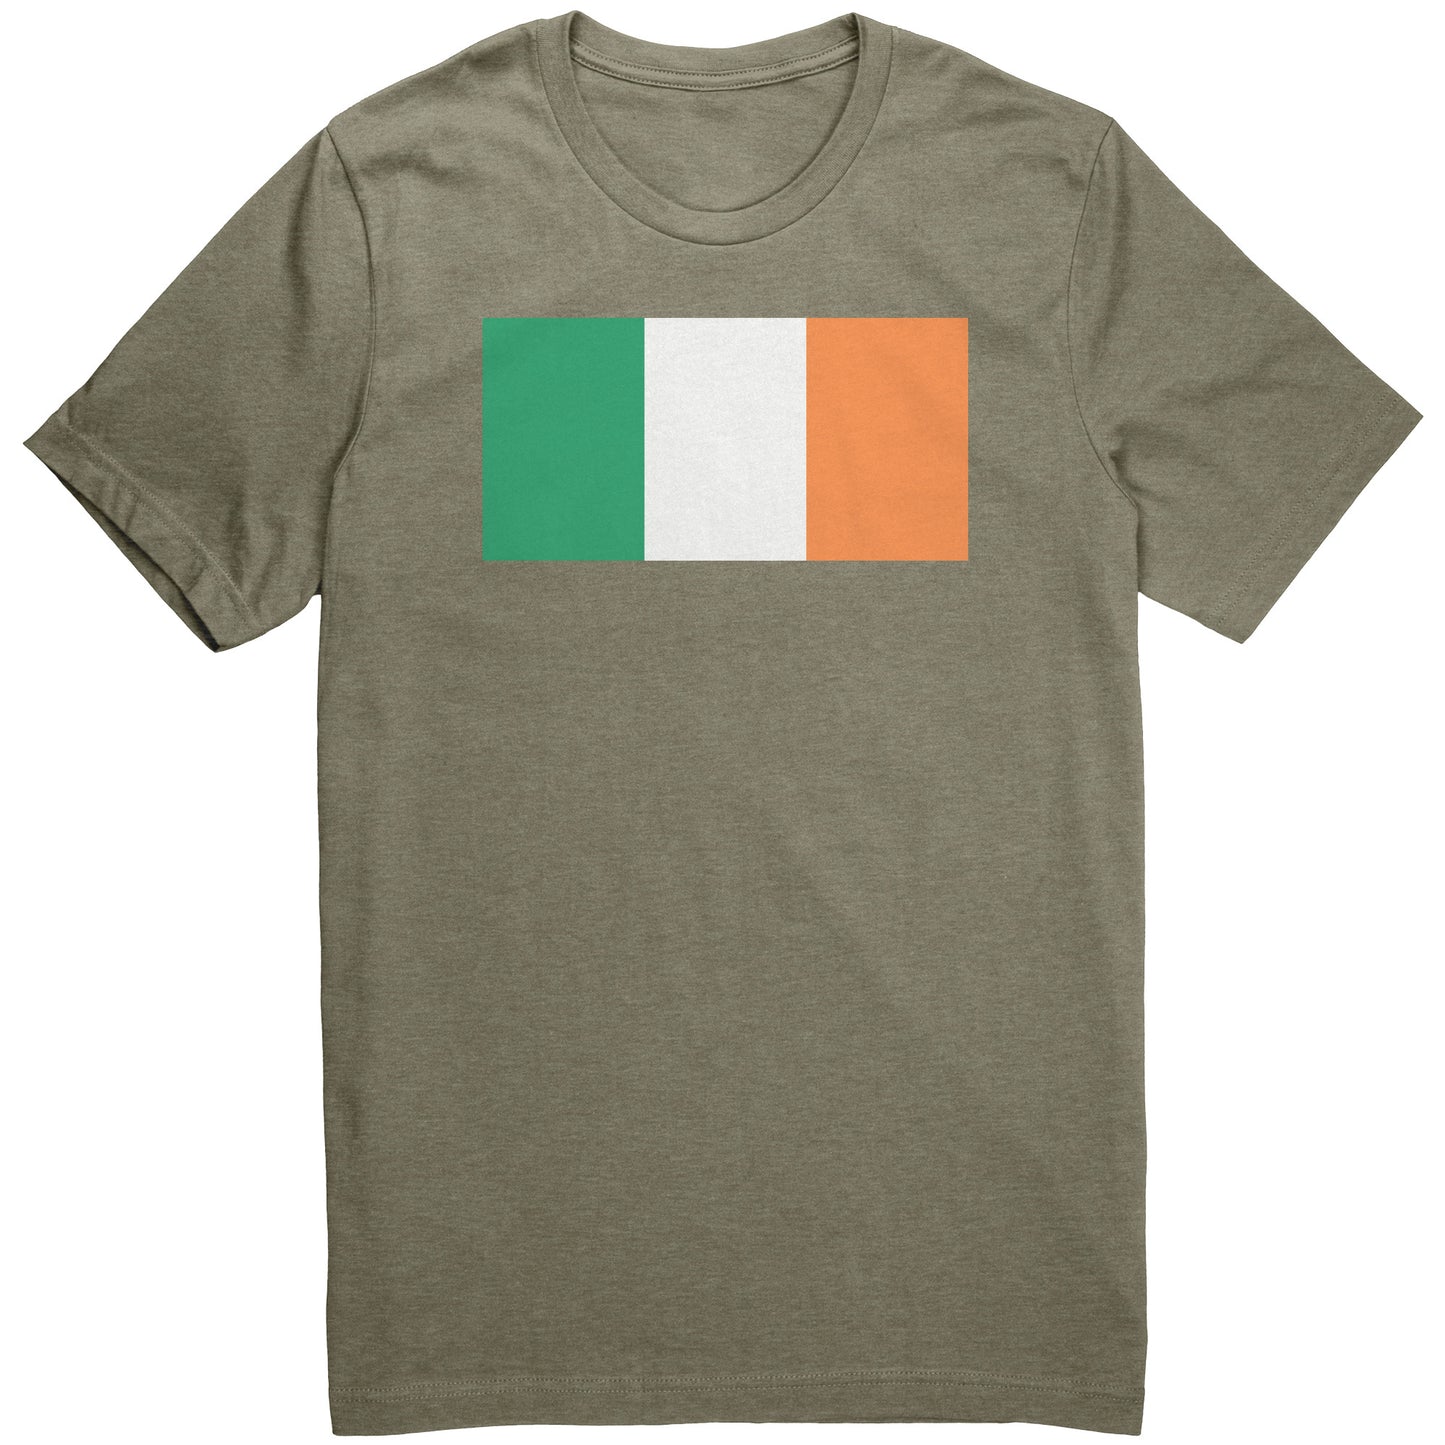 The flag Of Ireland